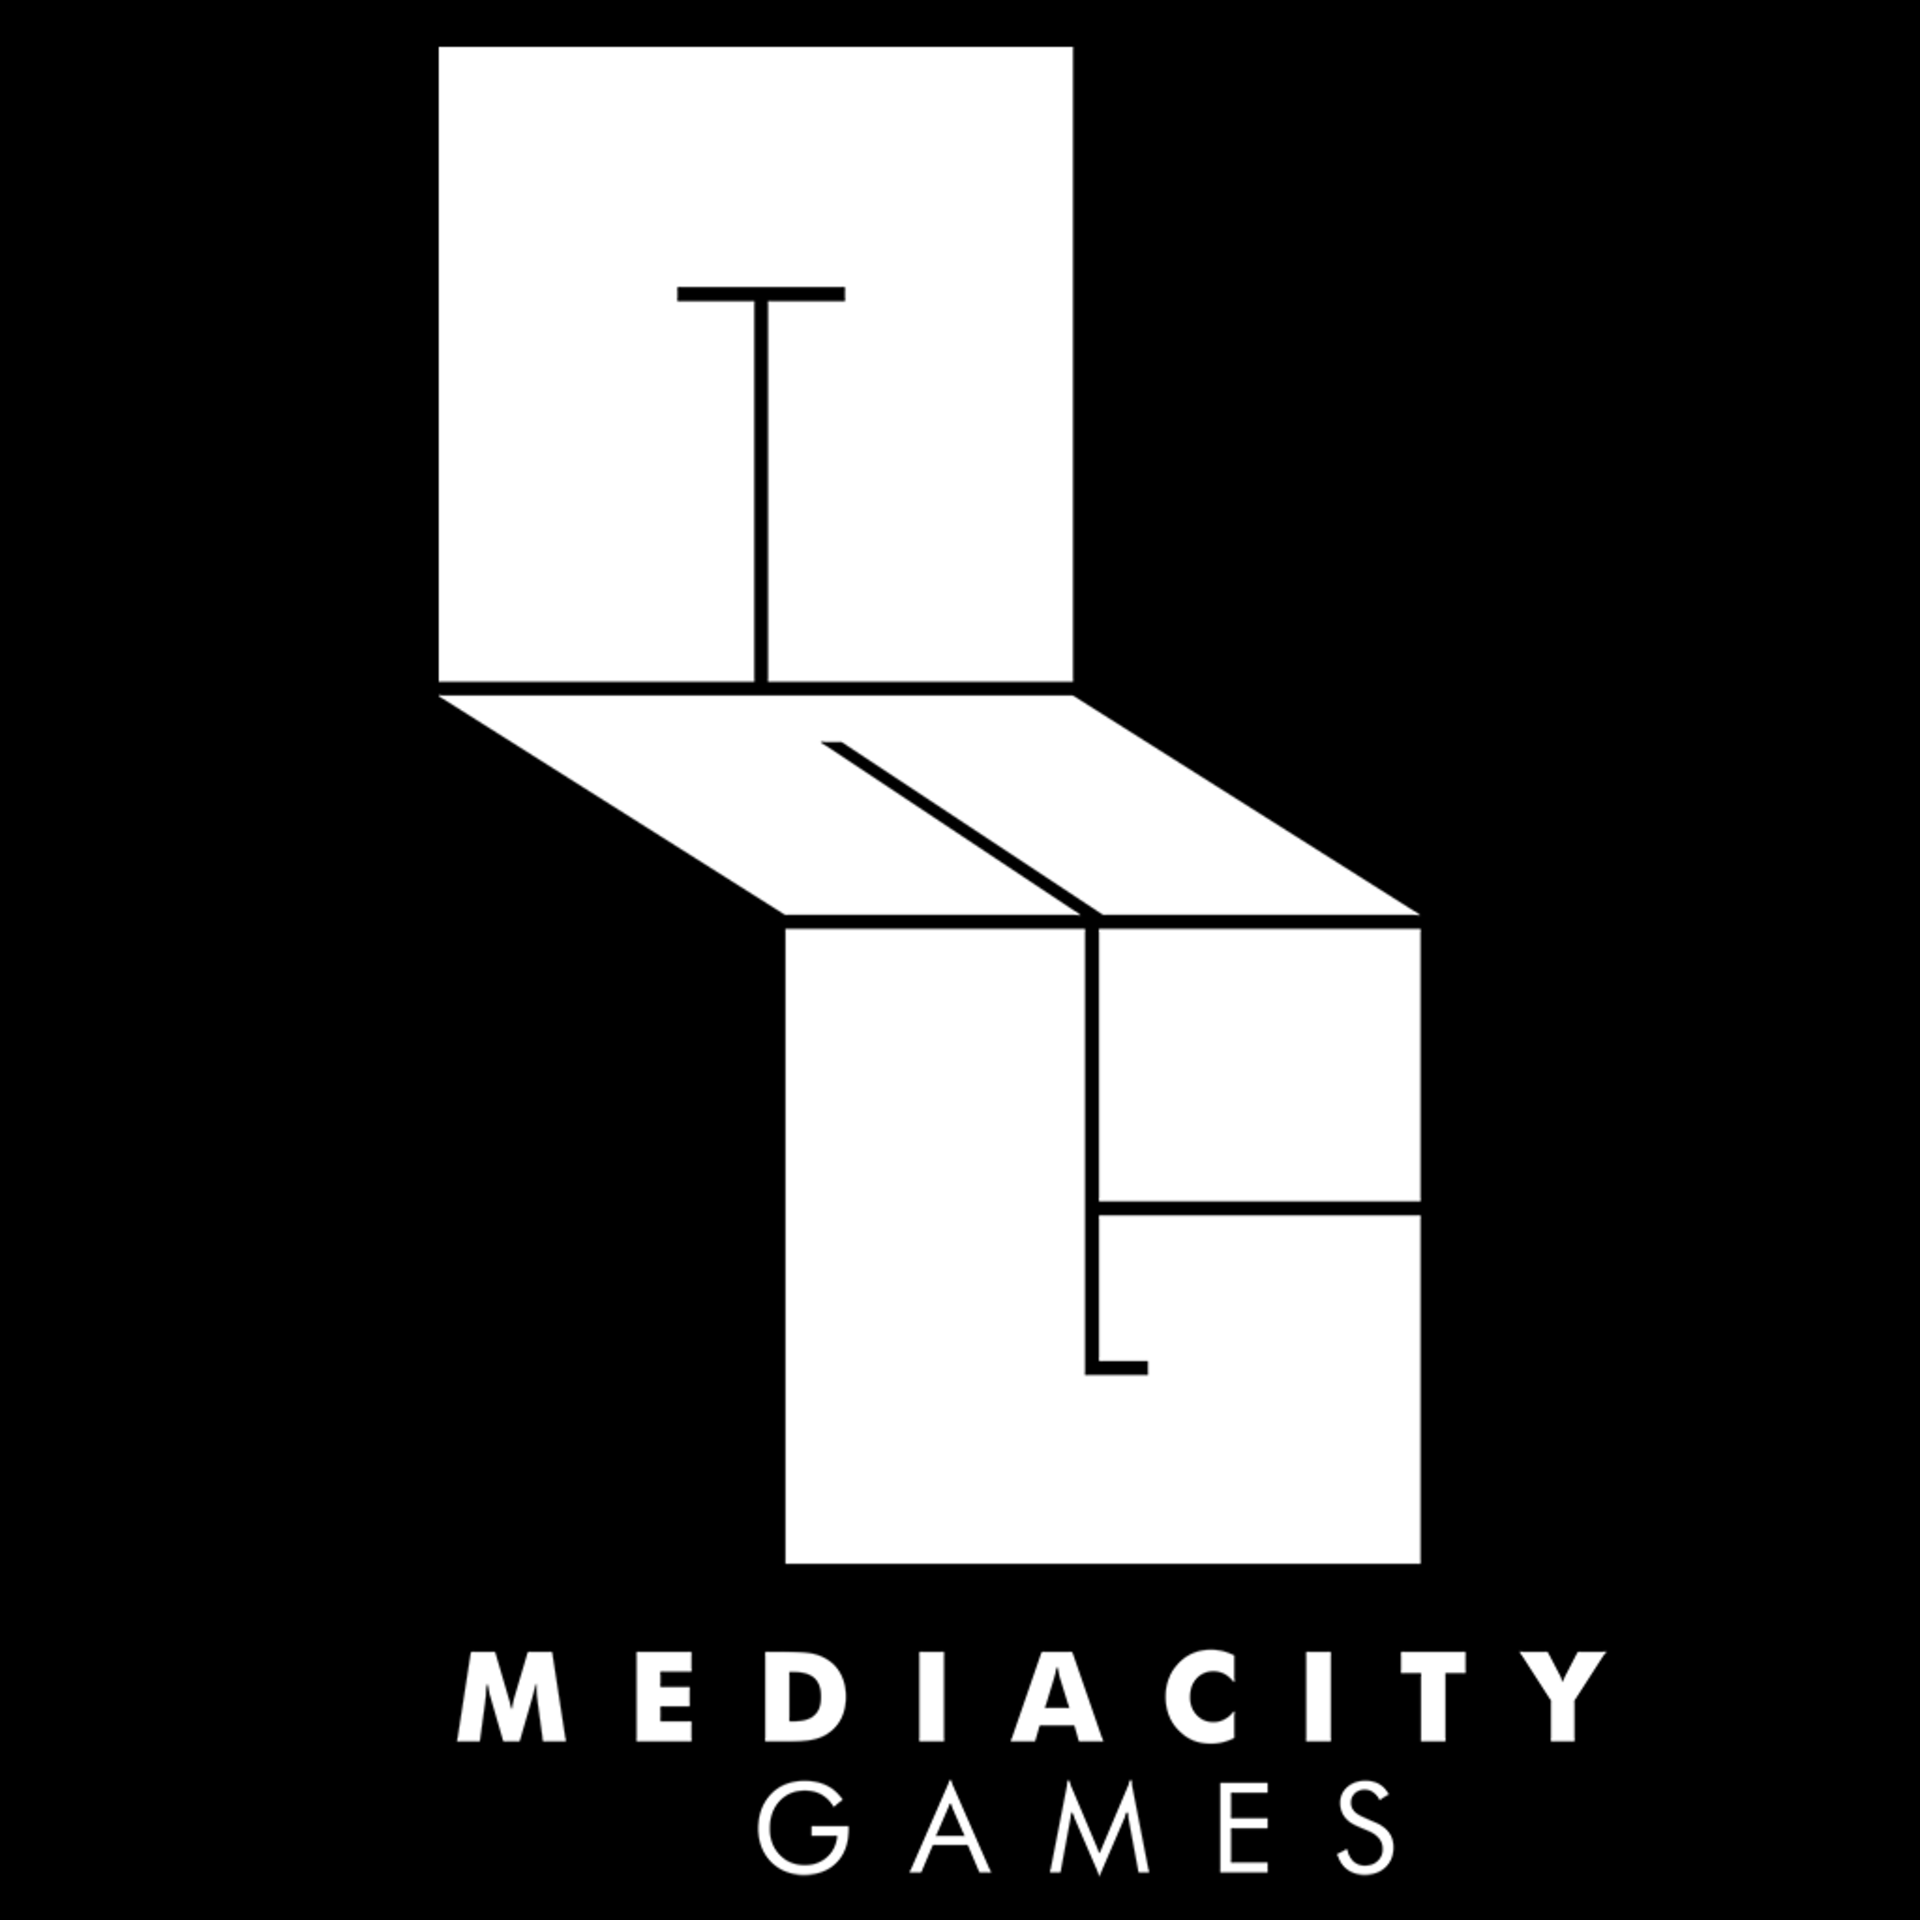 MediaCity Games}'s logo